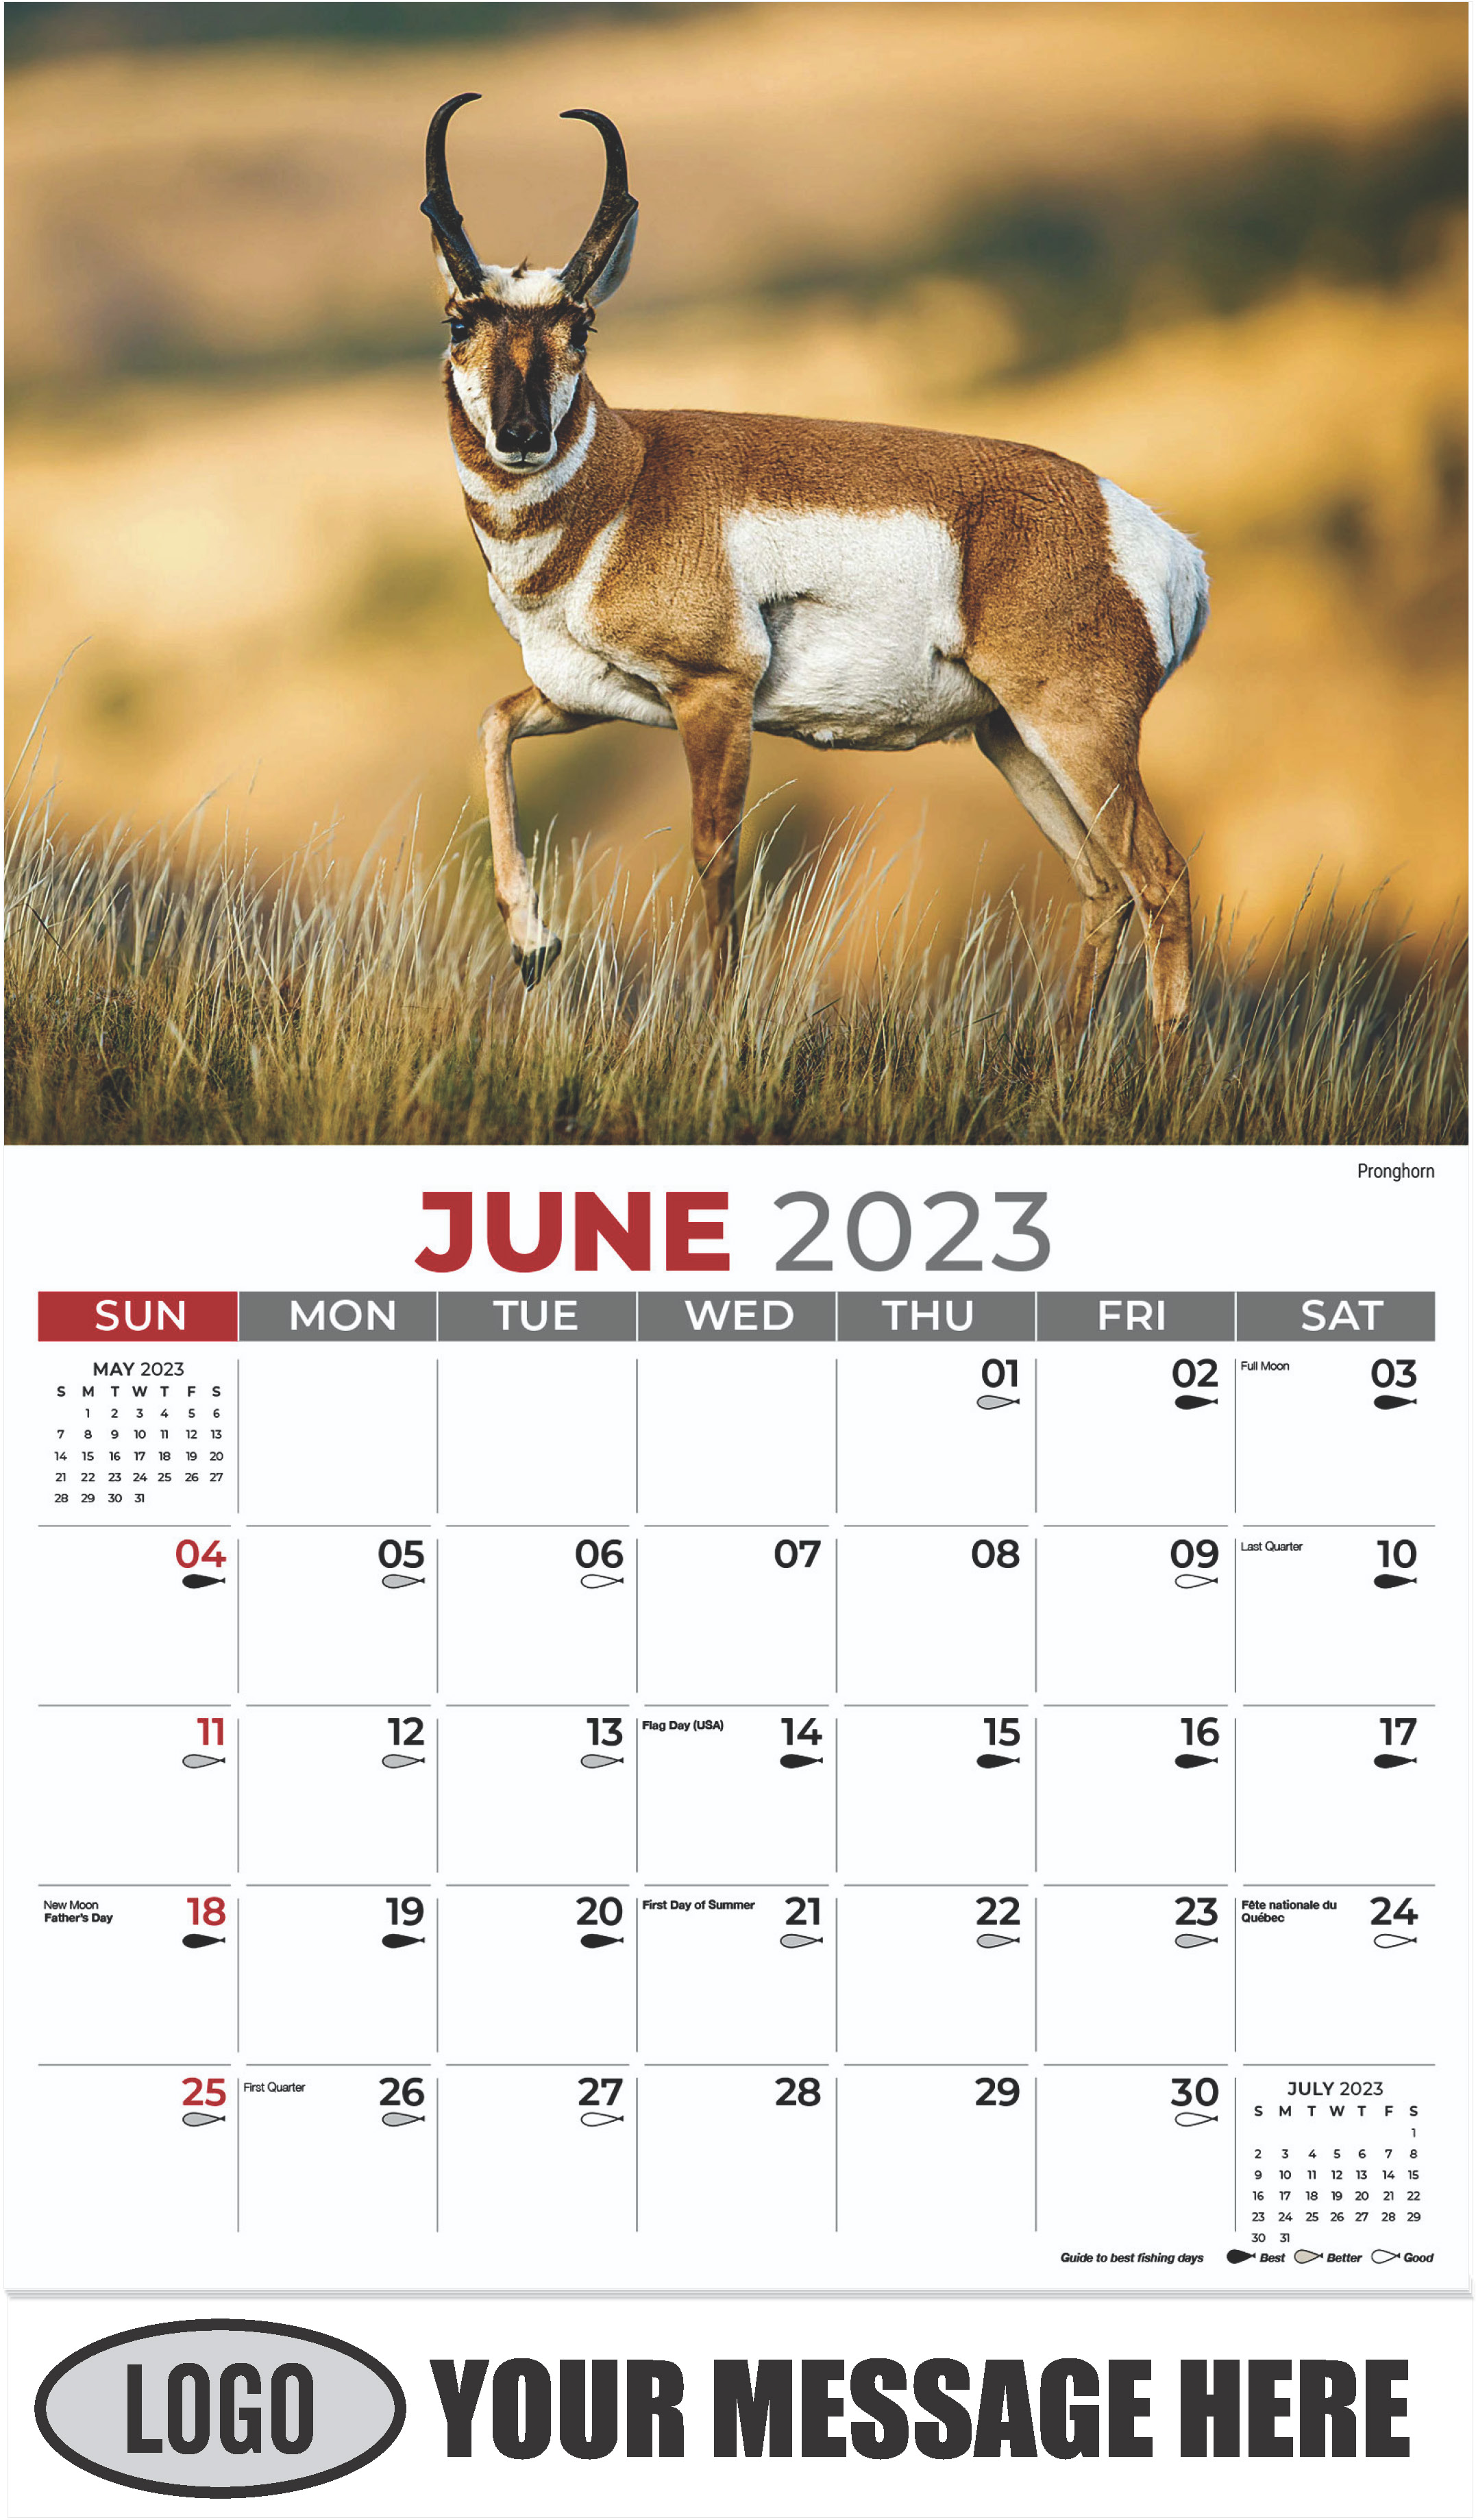 Pronghorn - June - North American Wildlife 2023 Promotional Calendar